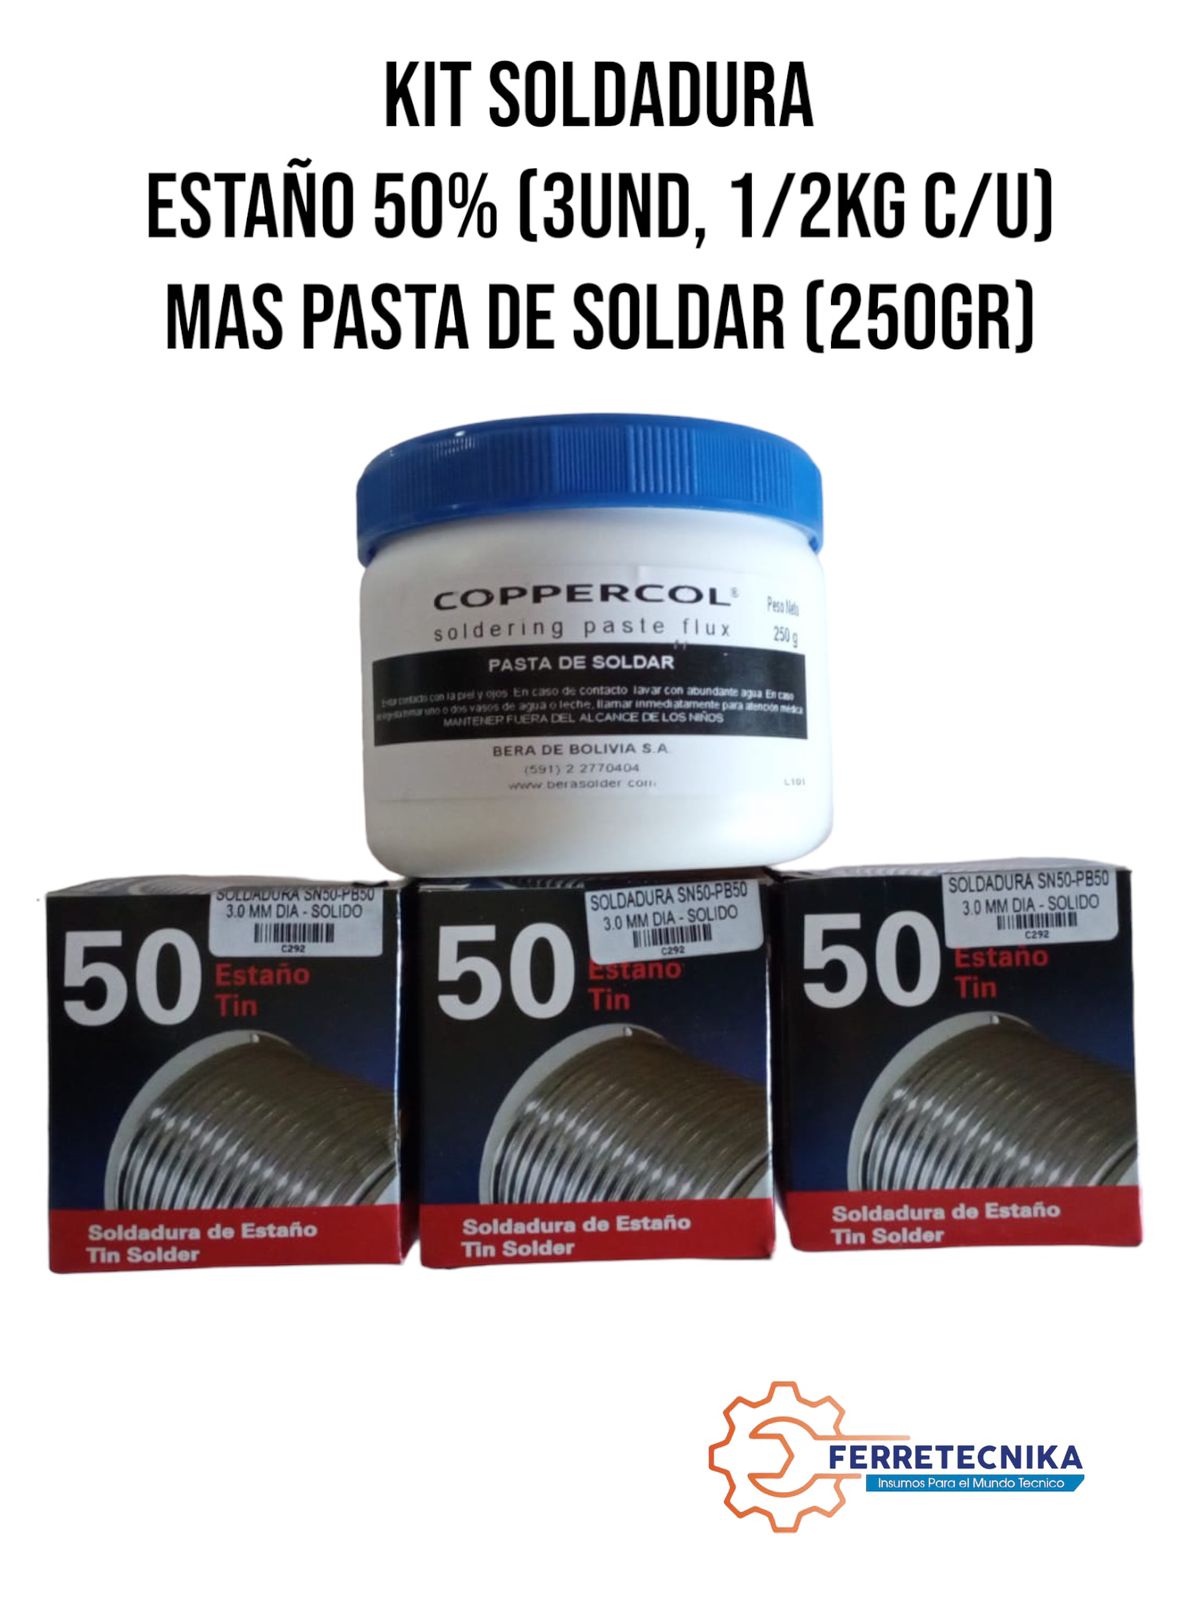 Kit Soldadura Estaño 50% y Pasta para Soldar - Ferretecnika